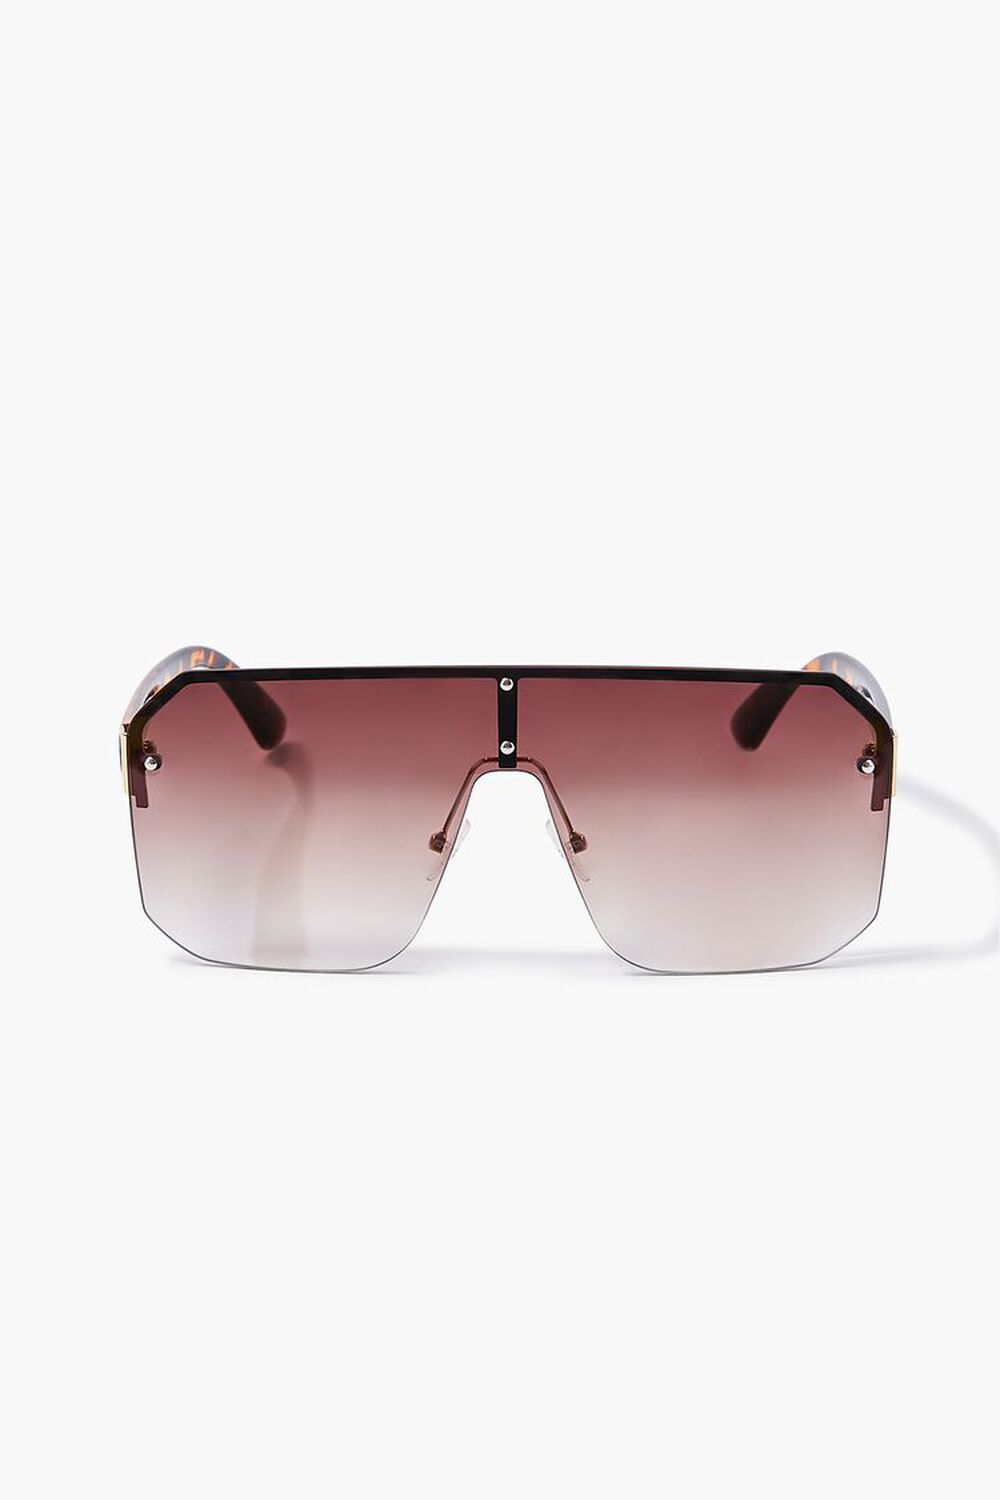 BROWN/BROWN Tortoiseshell-Arm Shield Sunglasses, image 1